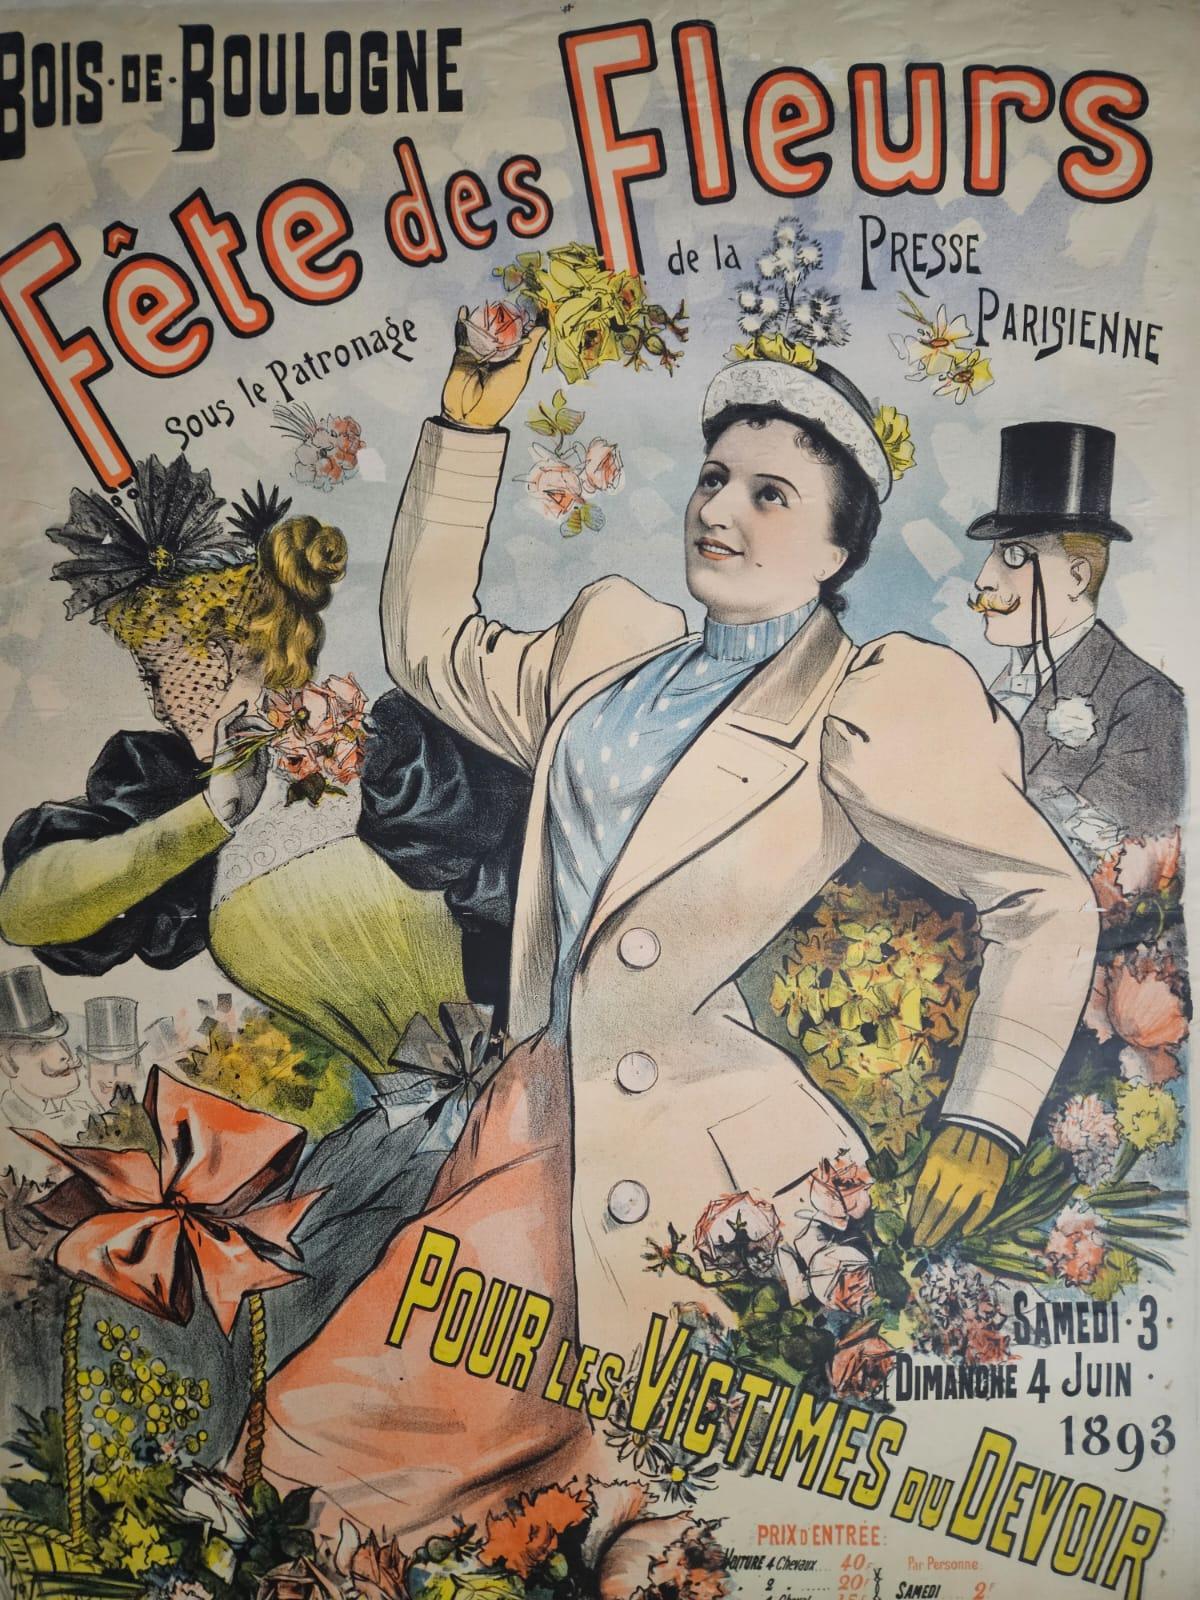 1893 Original poster by Louis Galice for the Bois de Boulogne flower festival For Sale 3